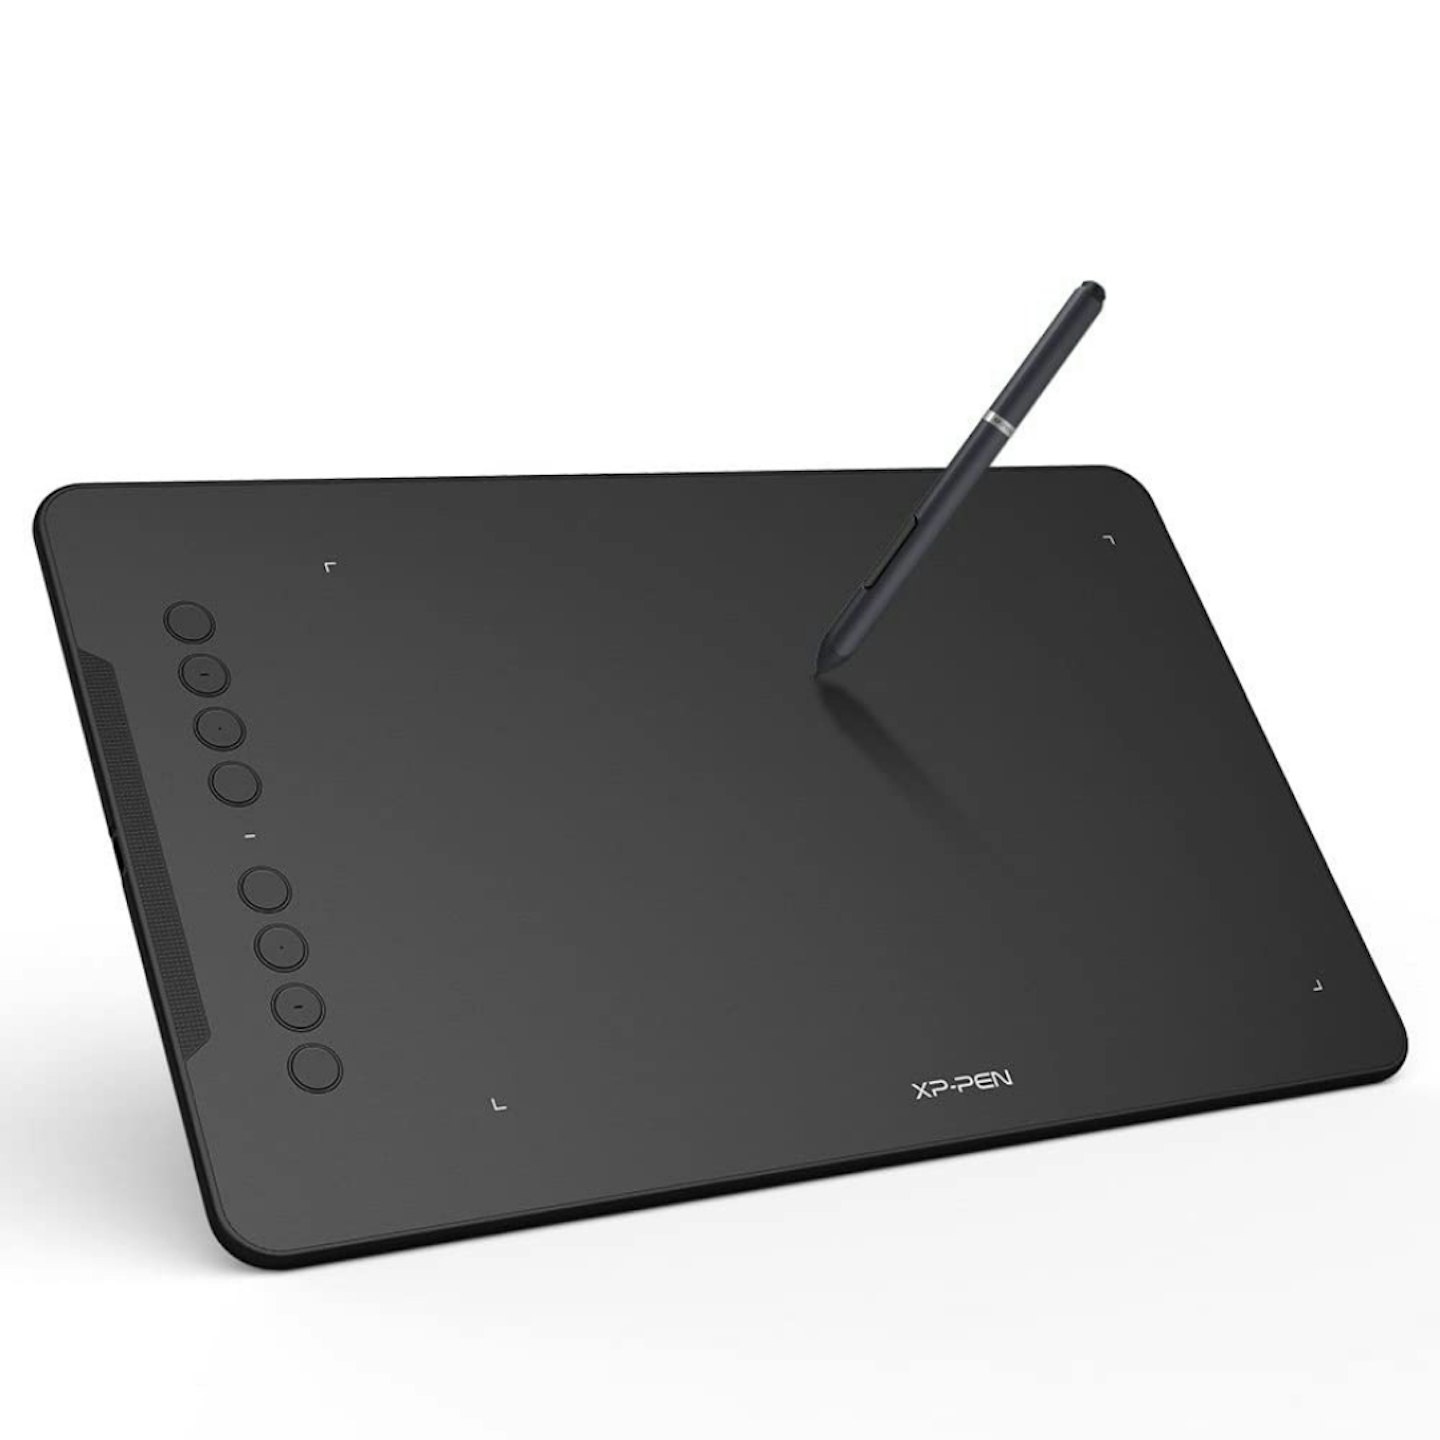 XP-Pen G960 USB Drawing Tablet